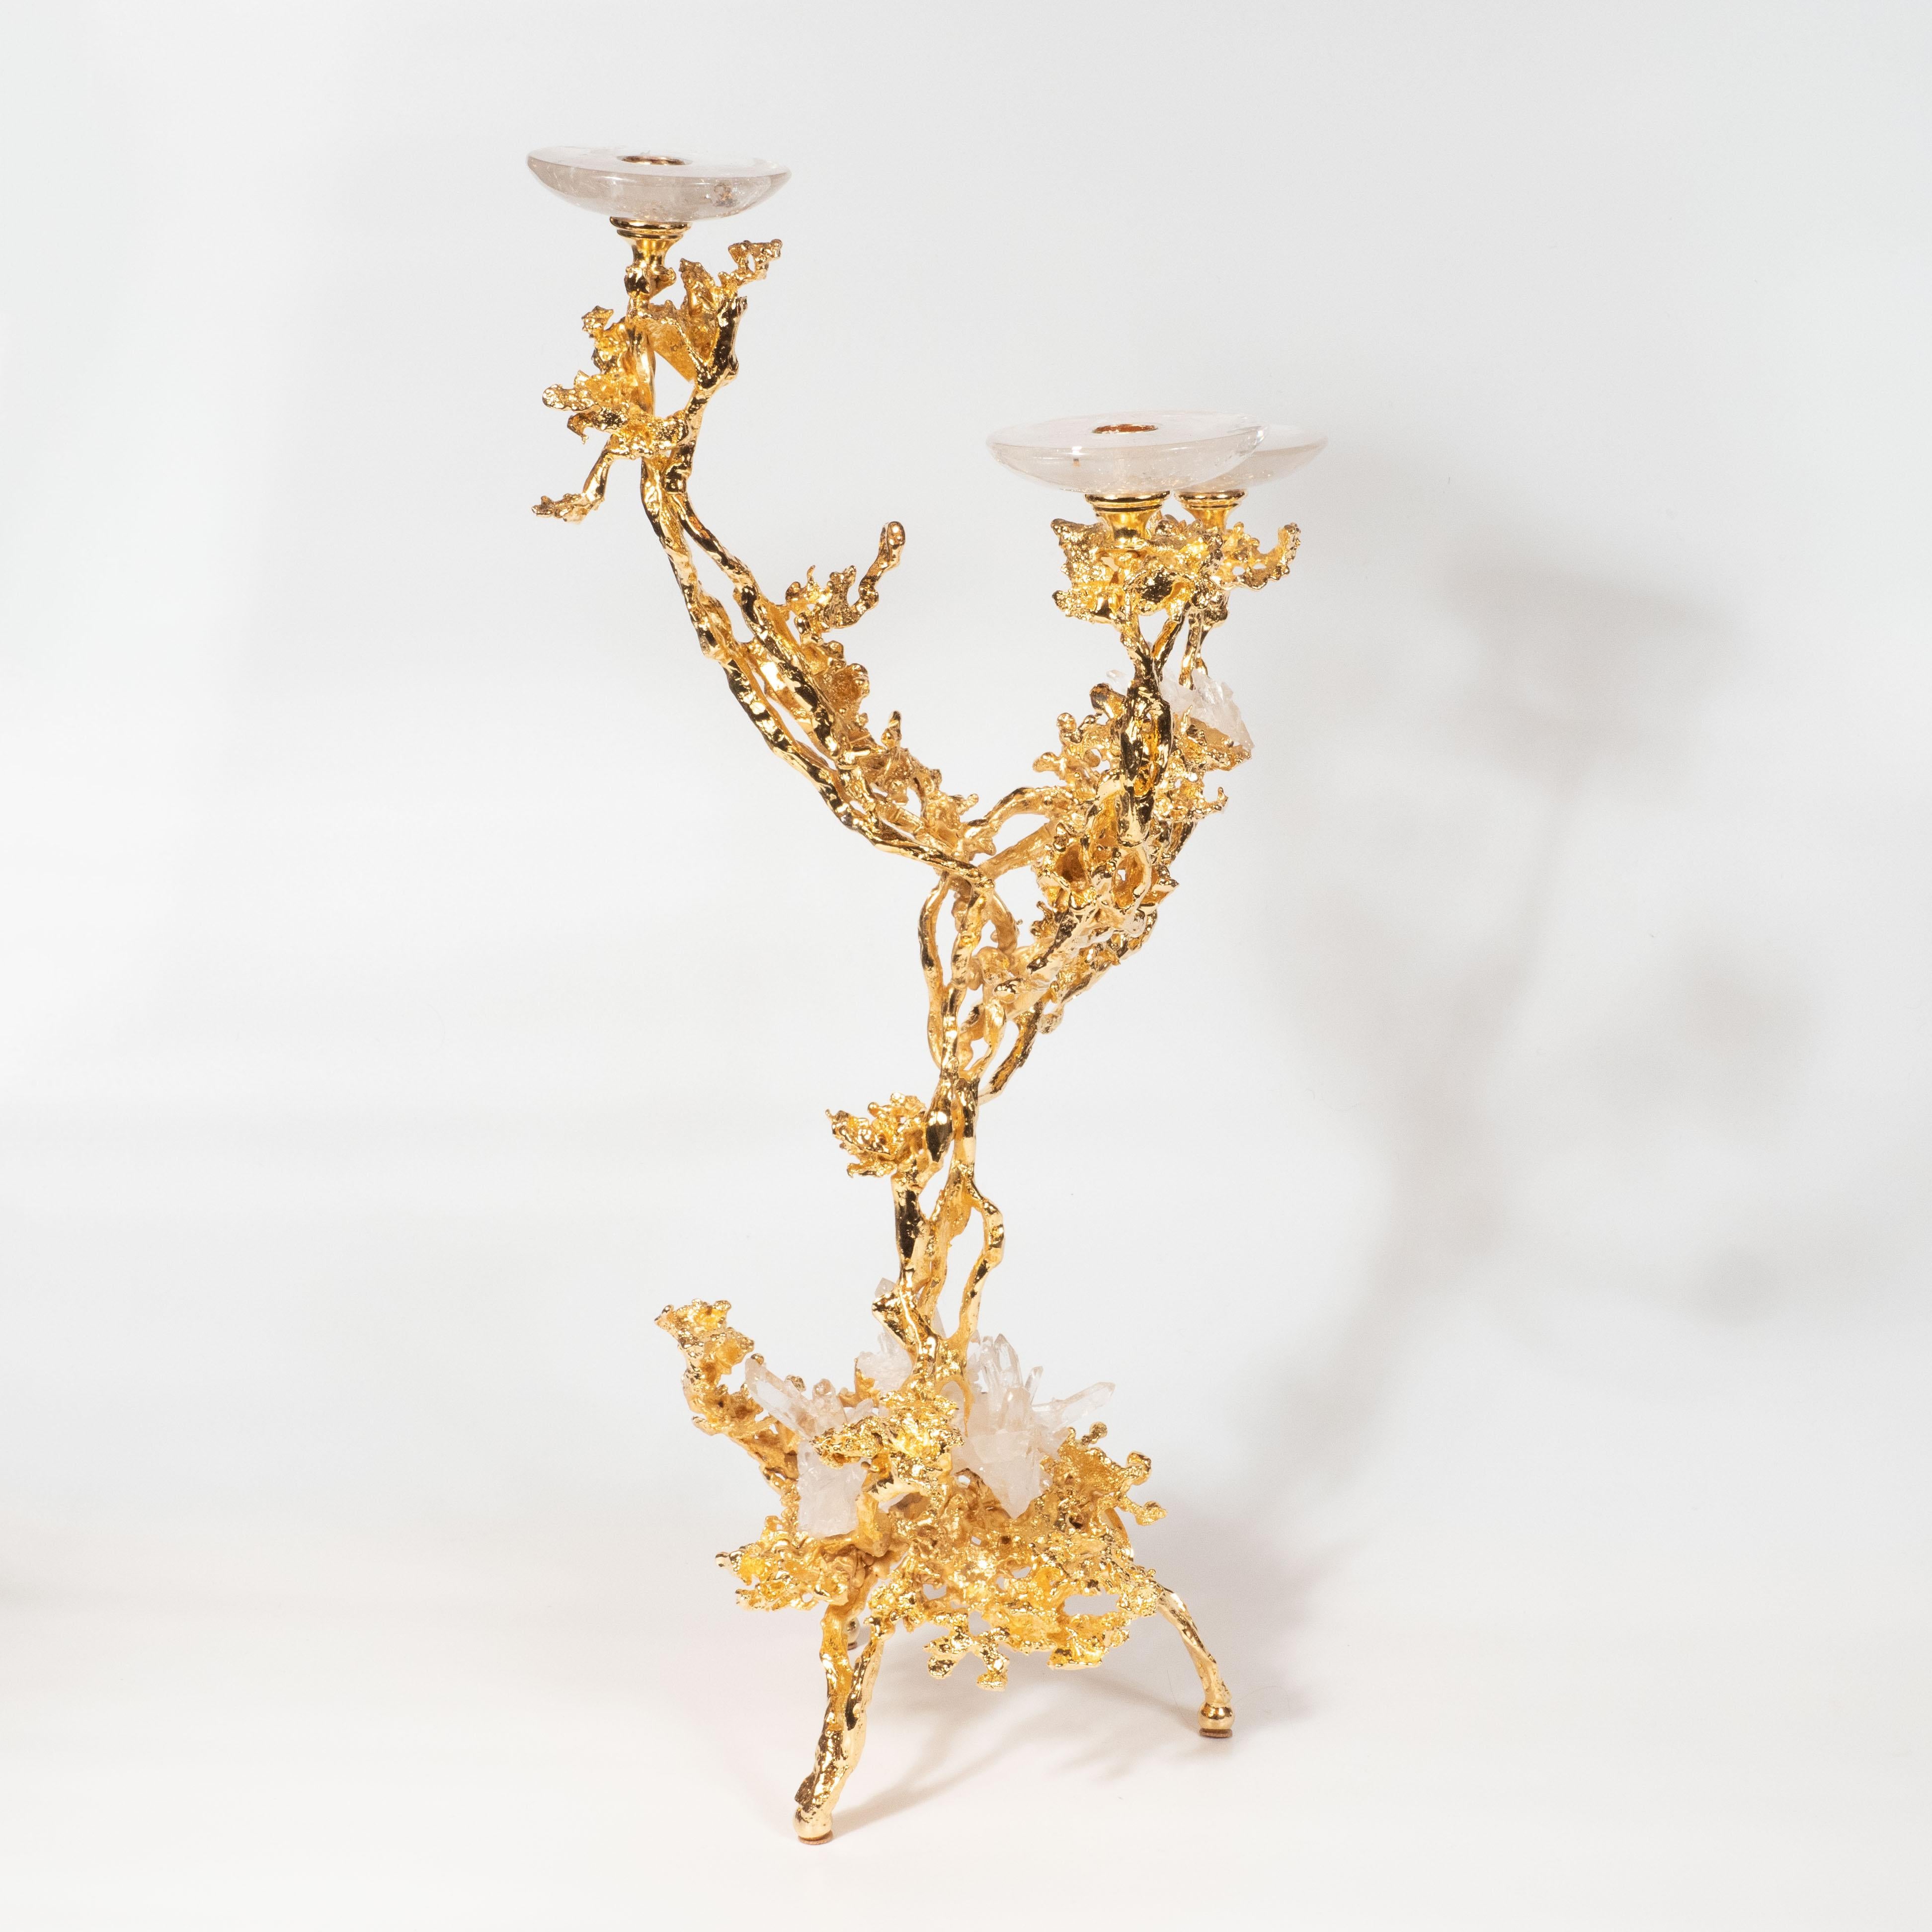 24-Karat Gold Triple Branch Candlesticks with Rock Crystals, Claude Boeltz, Pair For Sale 5